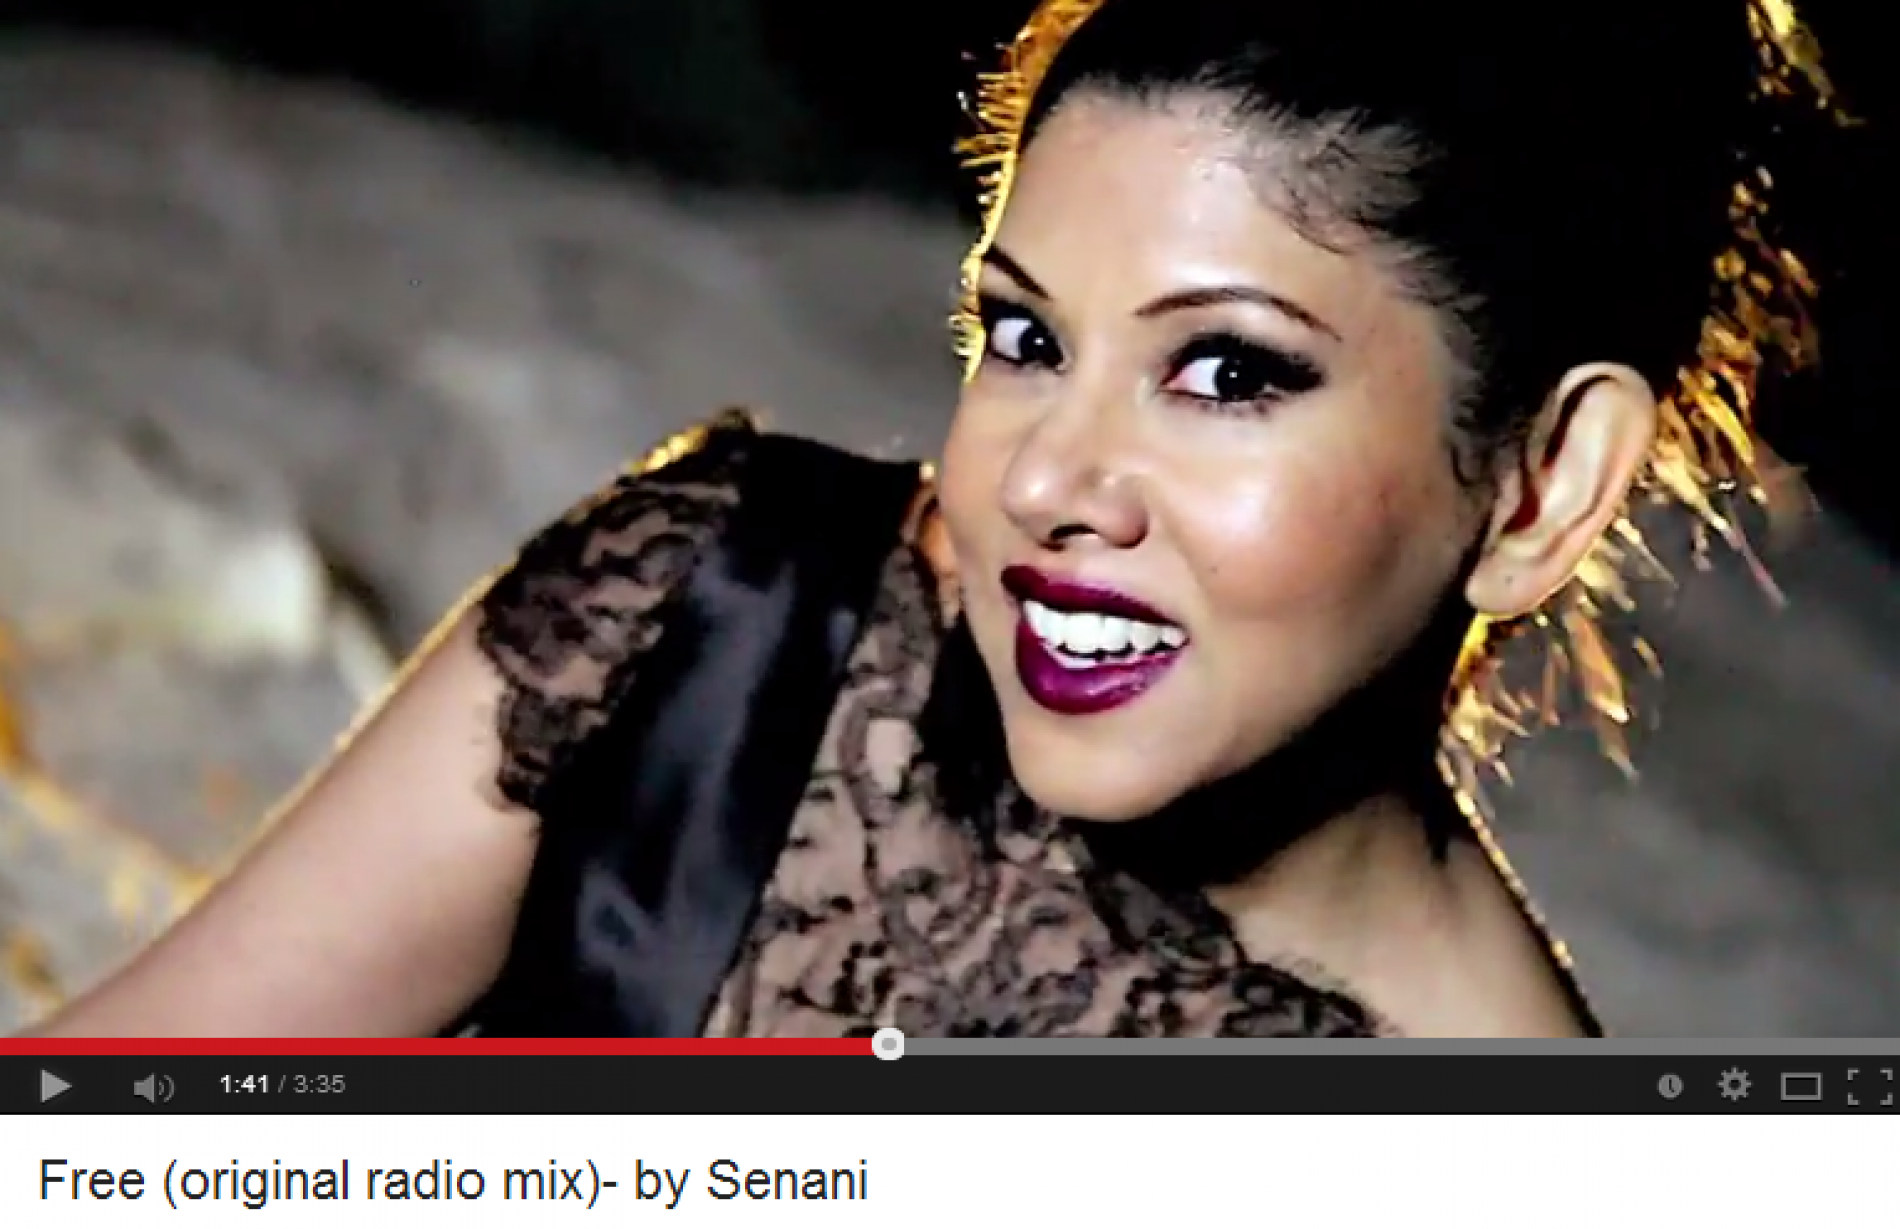 Senani – Free (original radio mix)